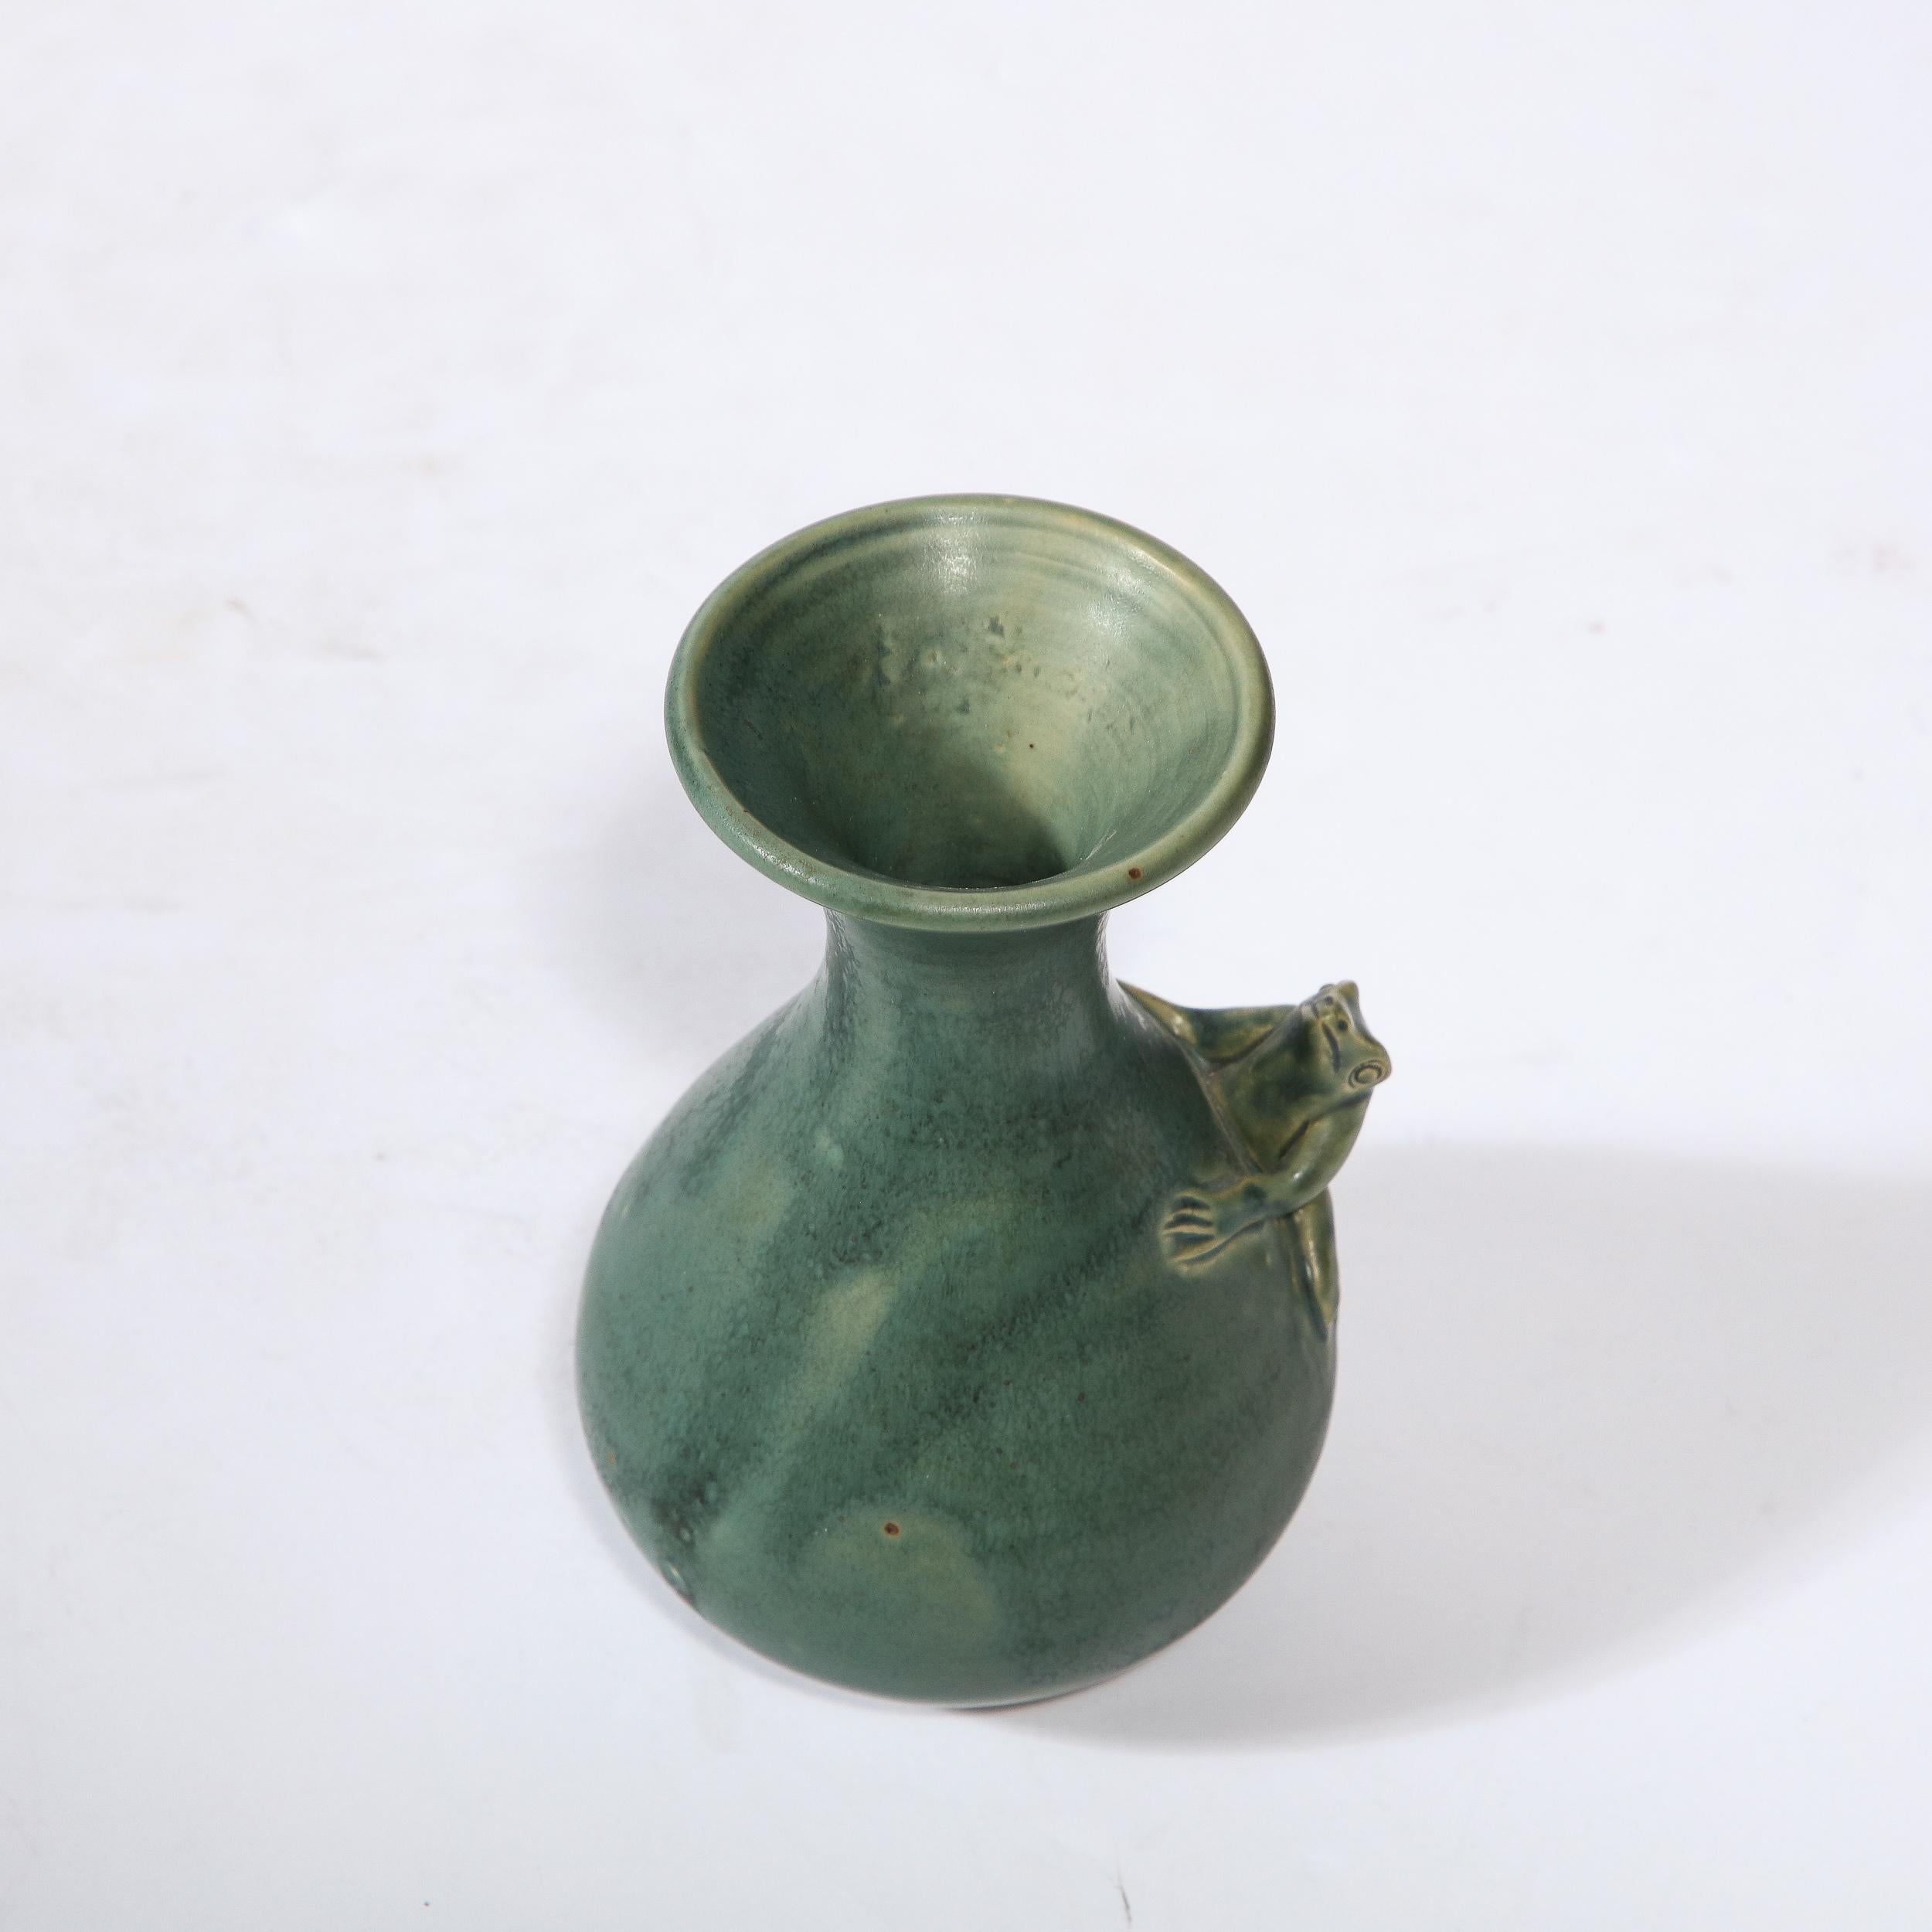 Modernist Sculptural Muted Jade Glazed Ceramic Vase with Frog Motif in Relief For Sale 6